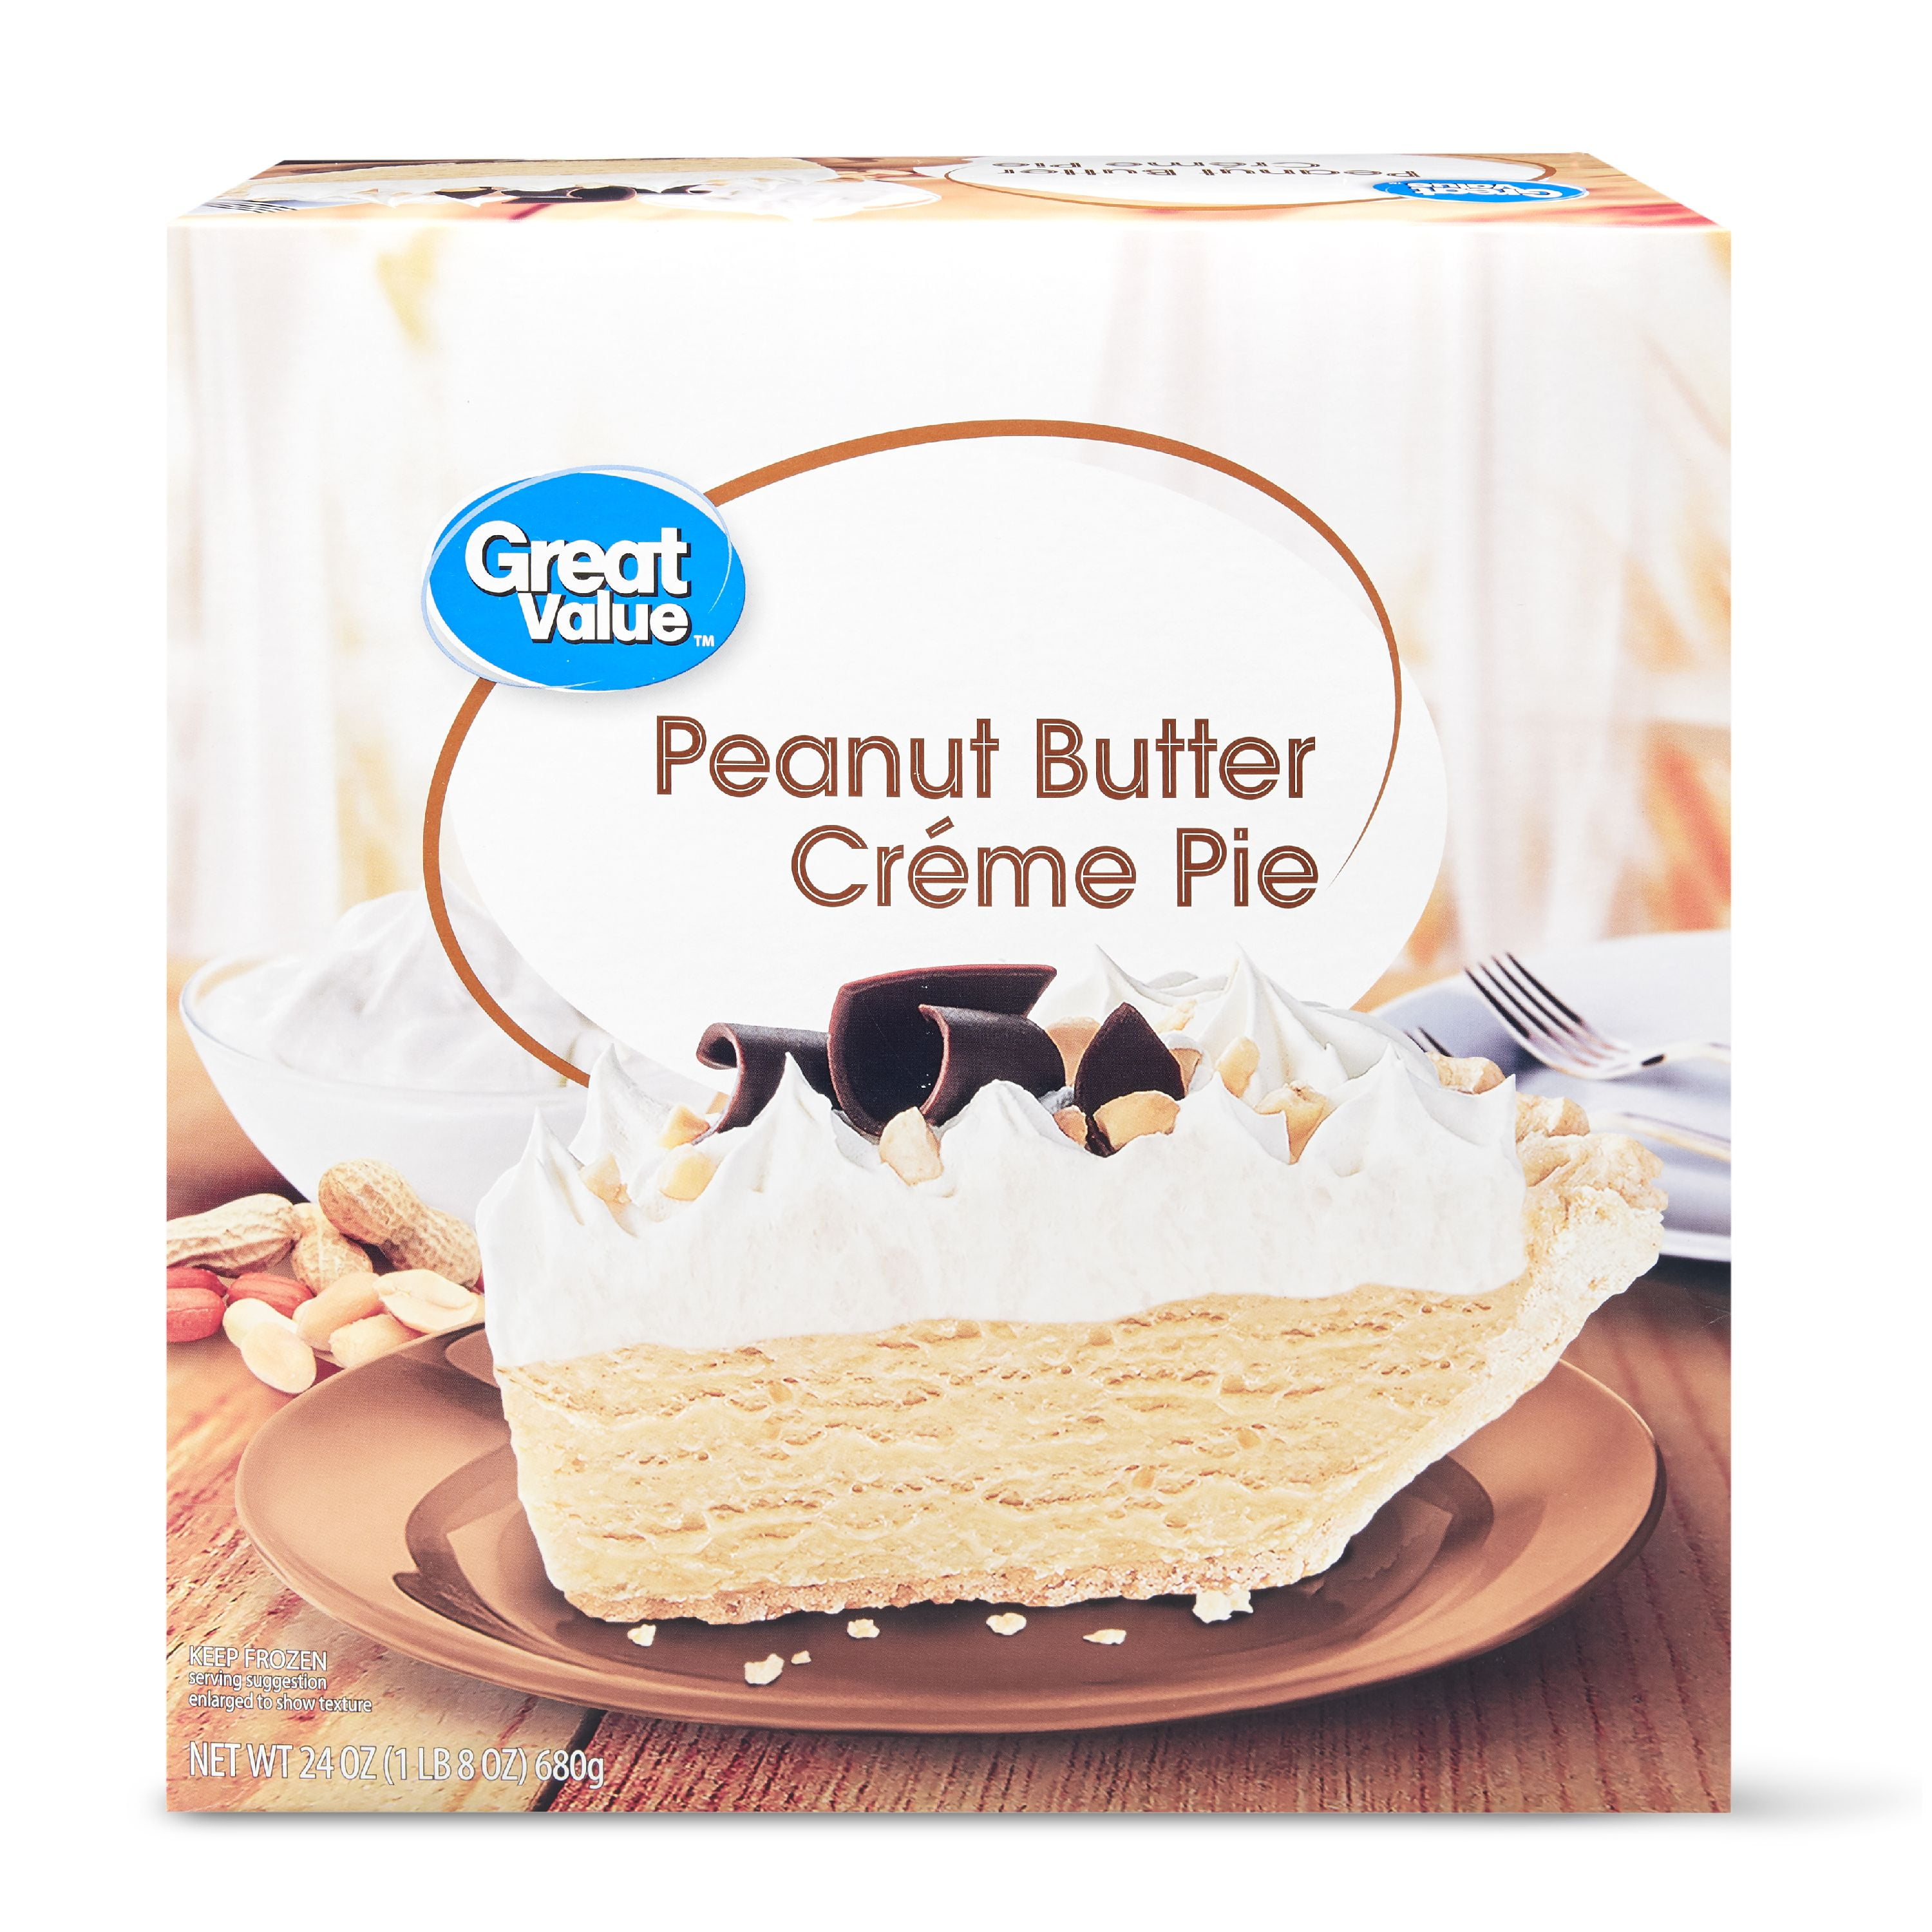 Great Value Peanut Butter Creme Pie 24 Oz Walmart Com Walmart Com